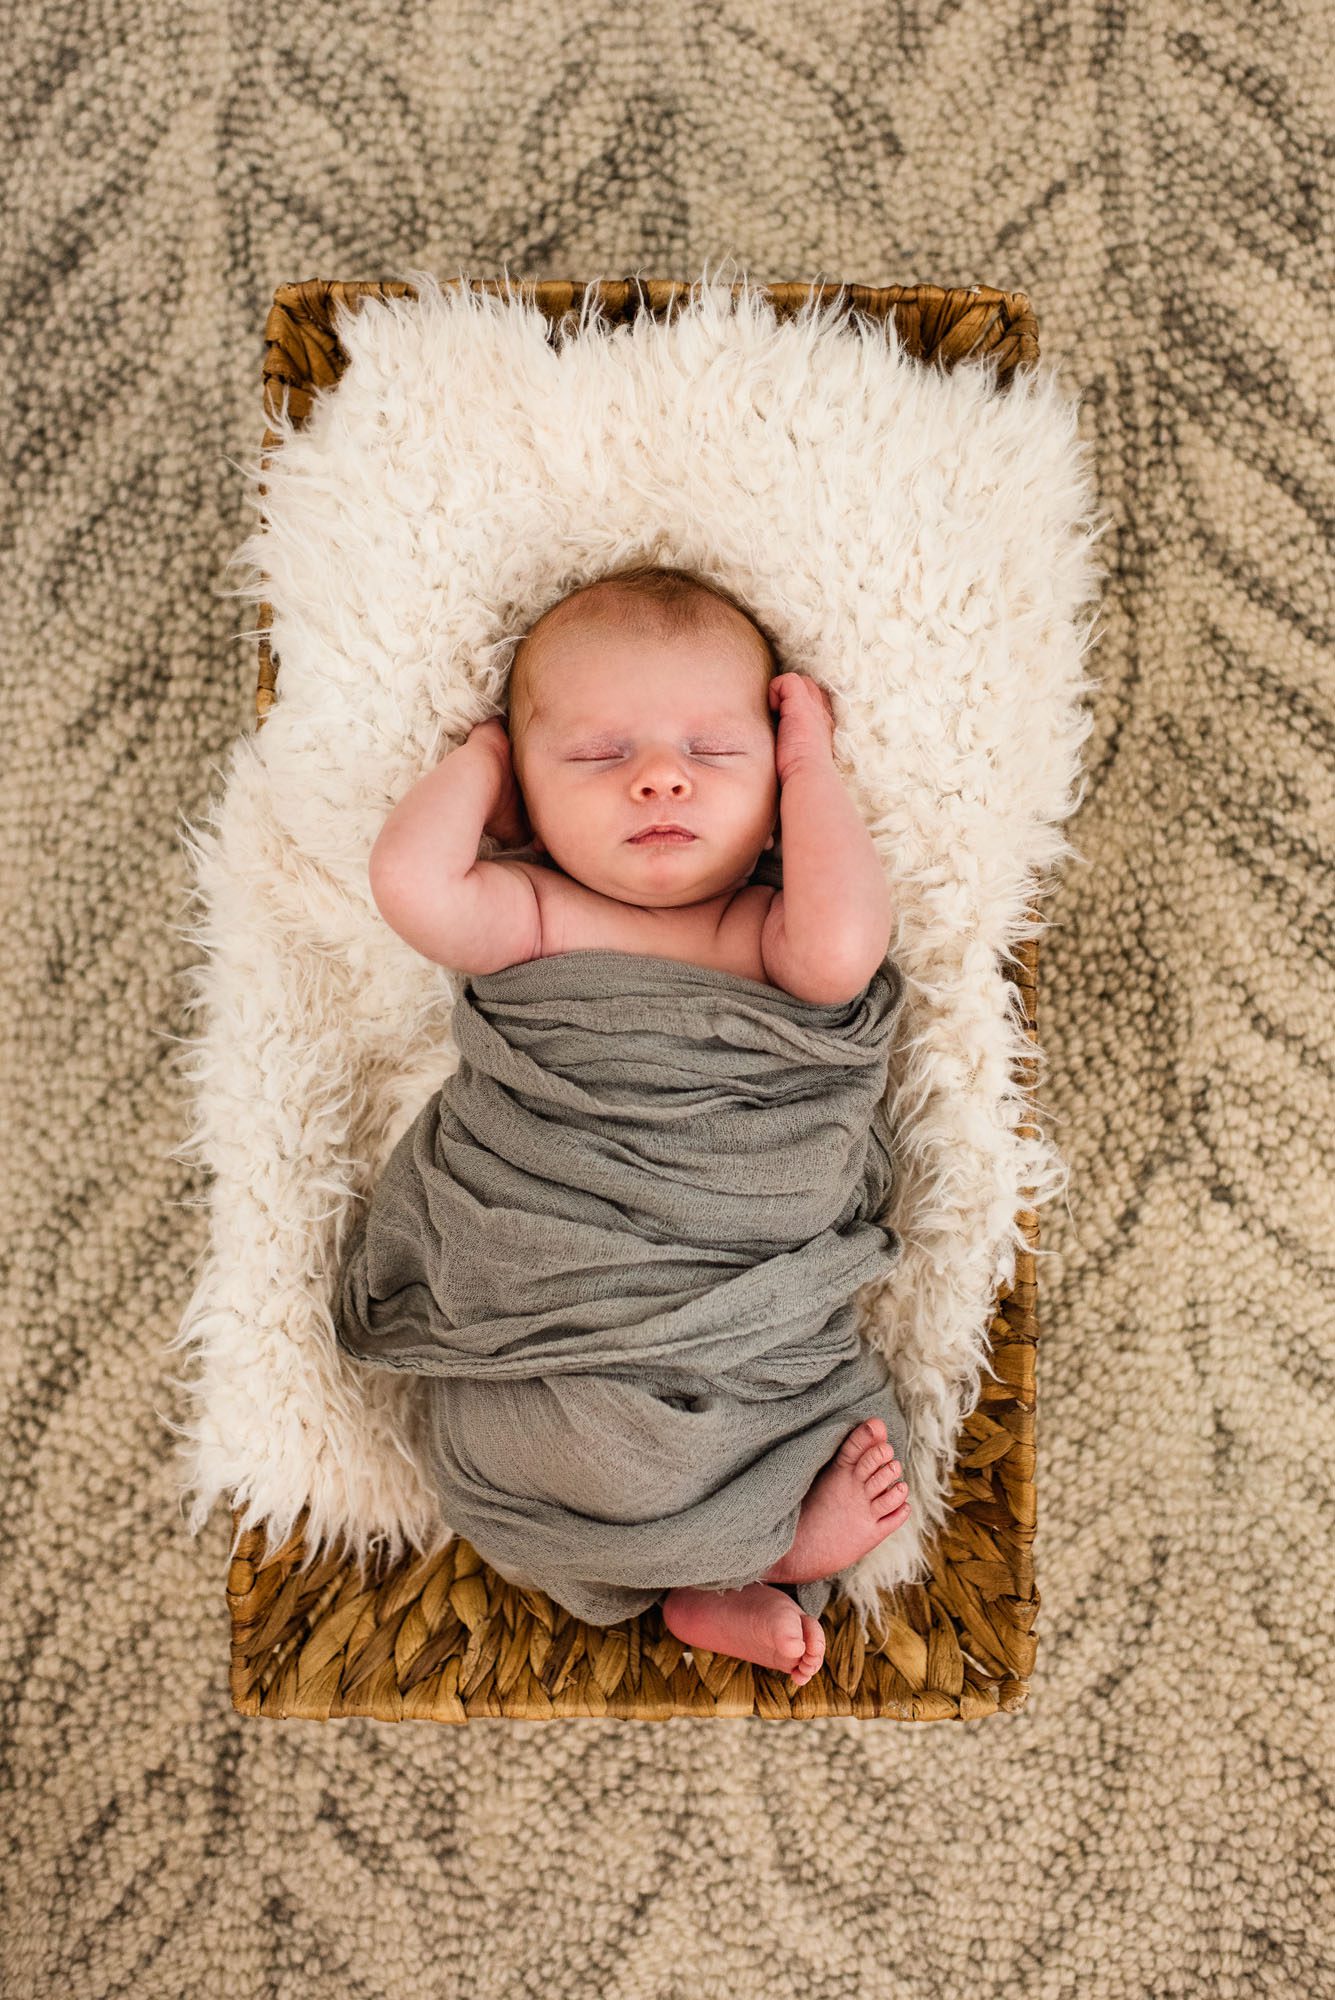 San Antonio Newborn Photographer, Newborn baby asleep in basket with hands up by his ears